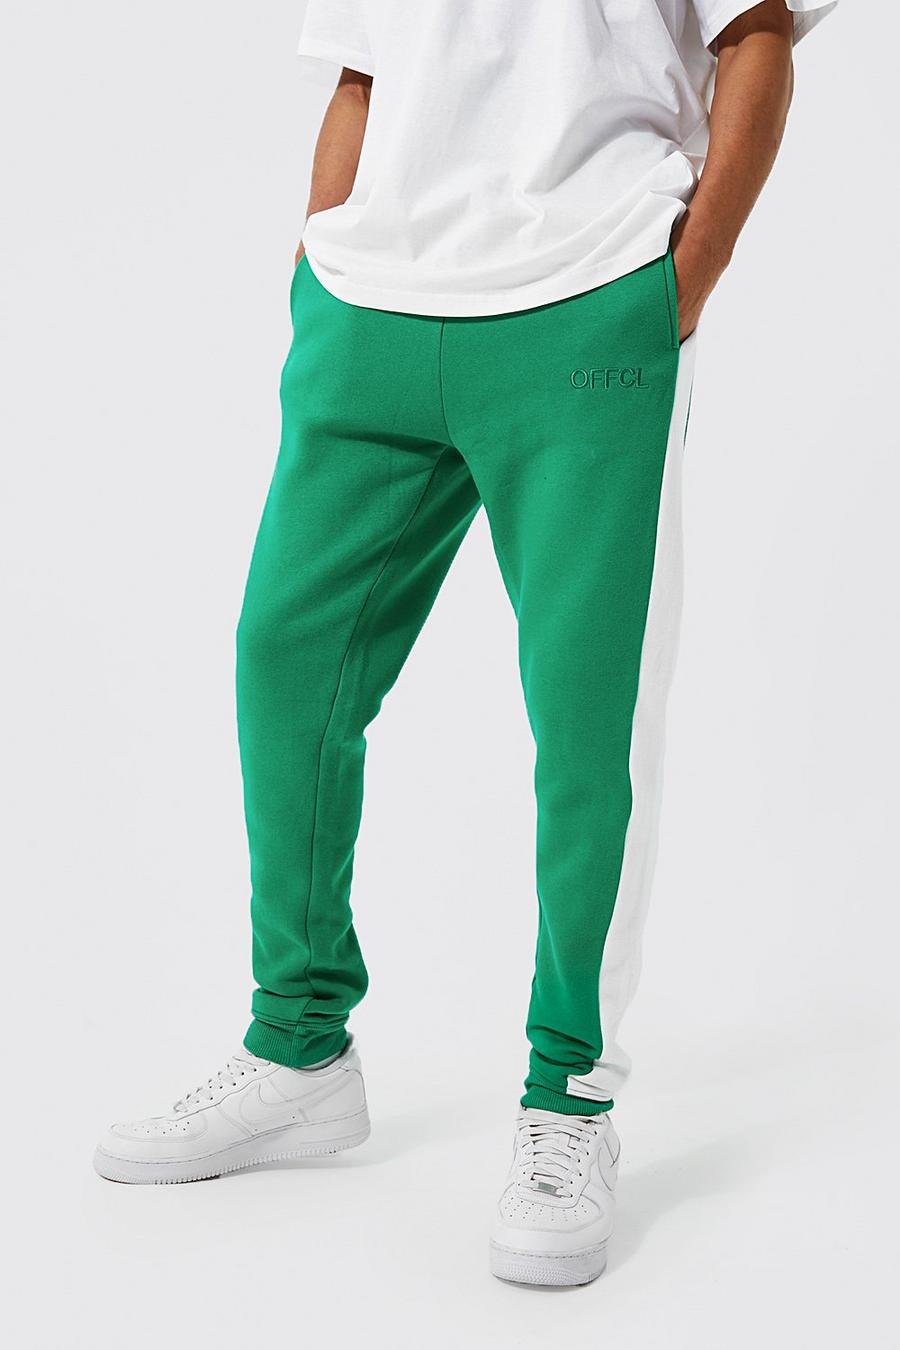 Bright green gerde מכנסי ריצה סקיני עם פאנל בצד וכיתוב Offcl, לגברים גבוהים